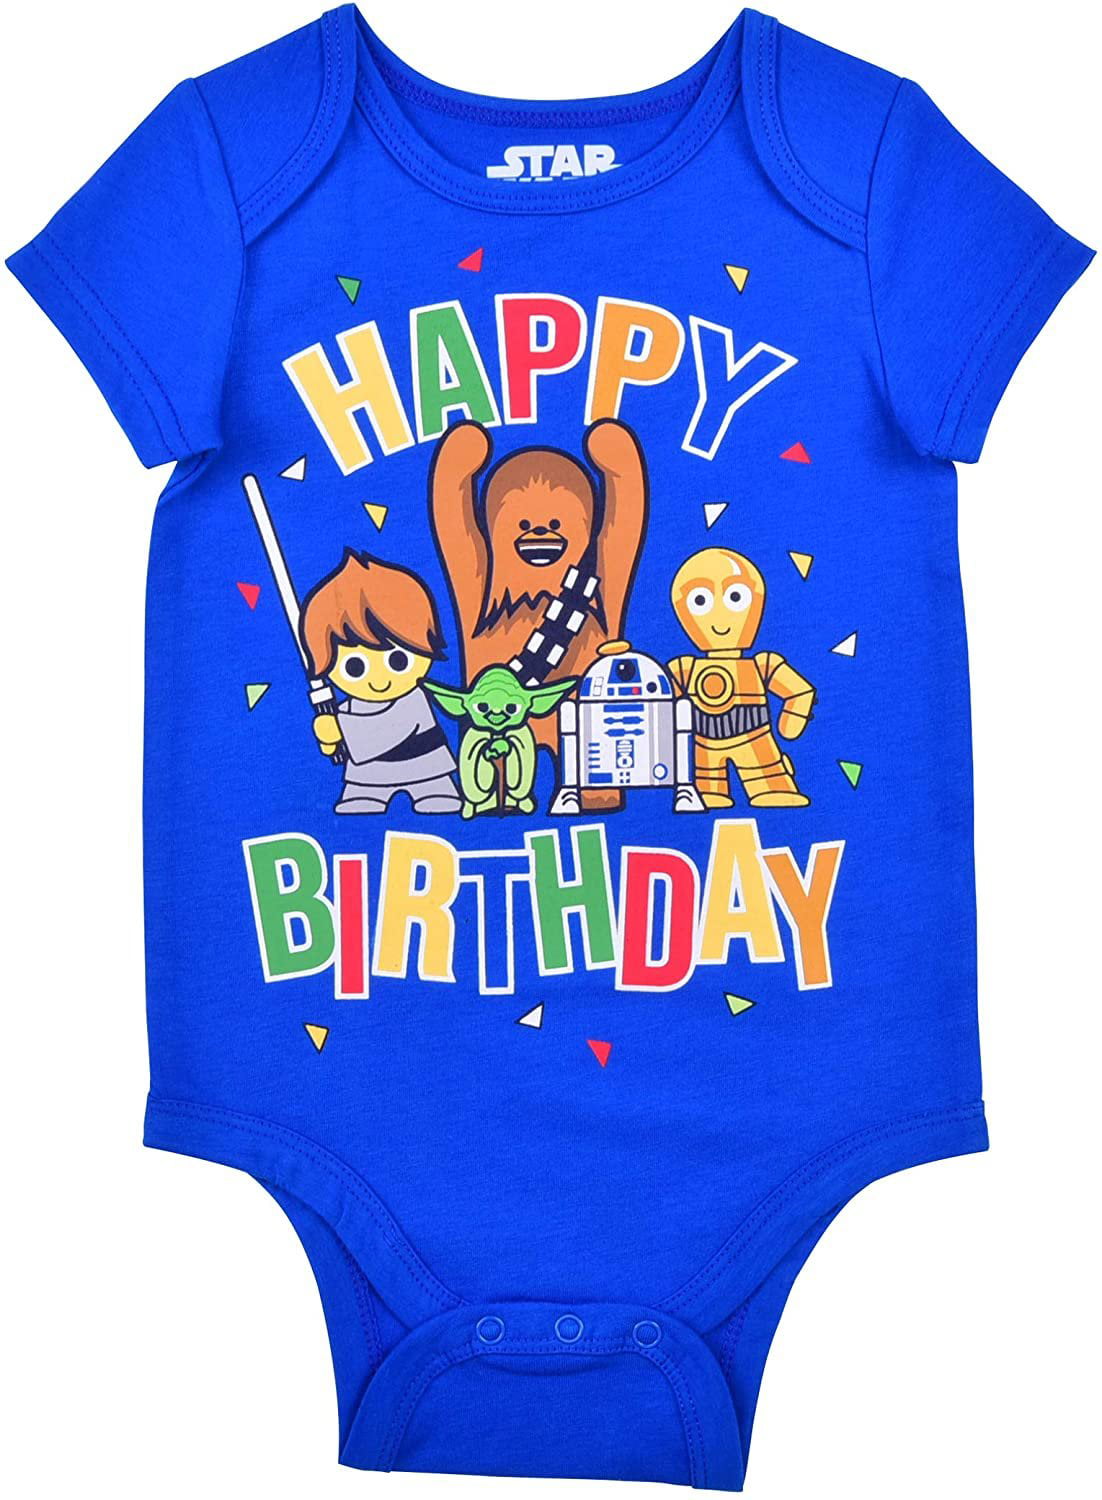 Star Wars Mandalorian Baby Infant The Child Printed Romper Bodysuit Size 0000 